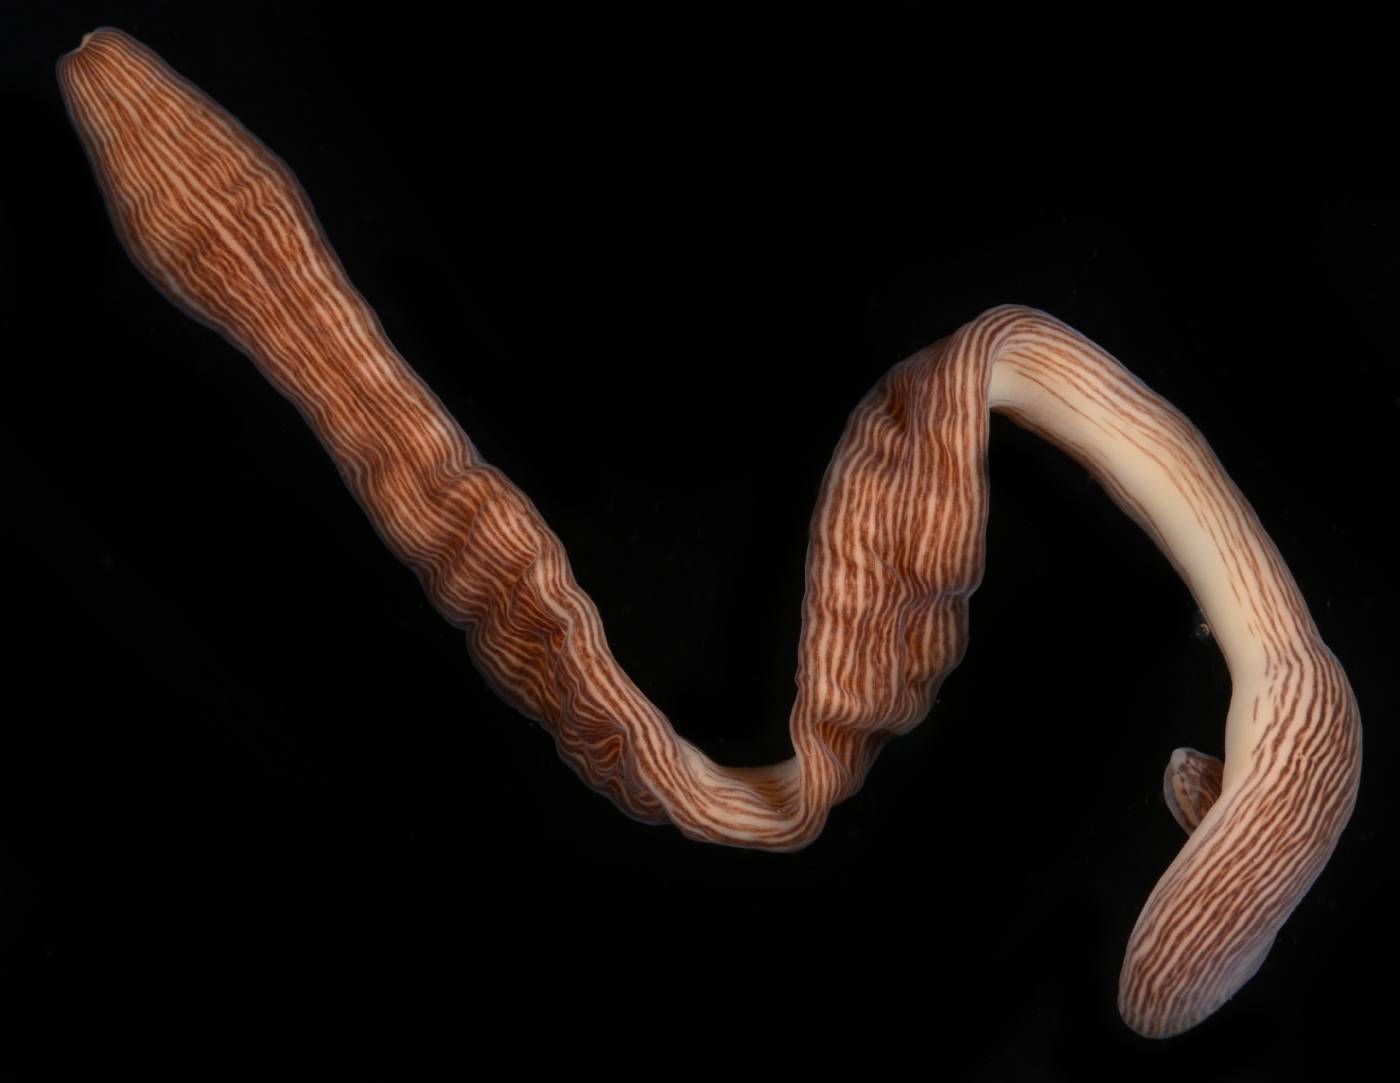 Baseodiscus delineatus image